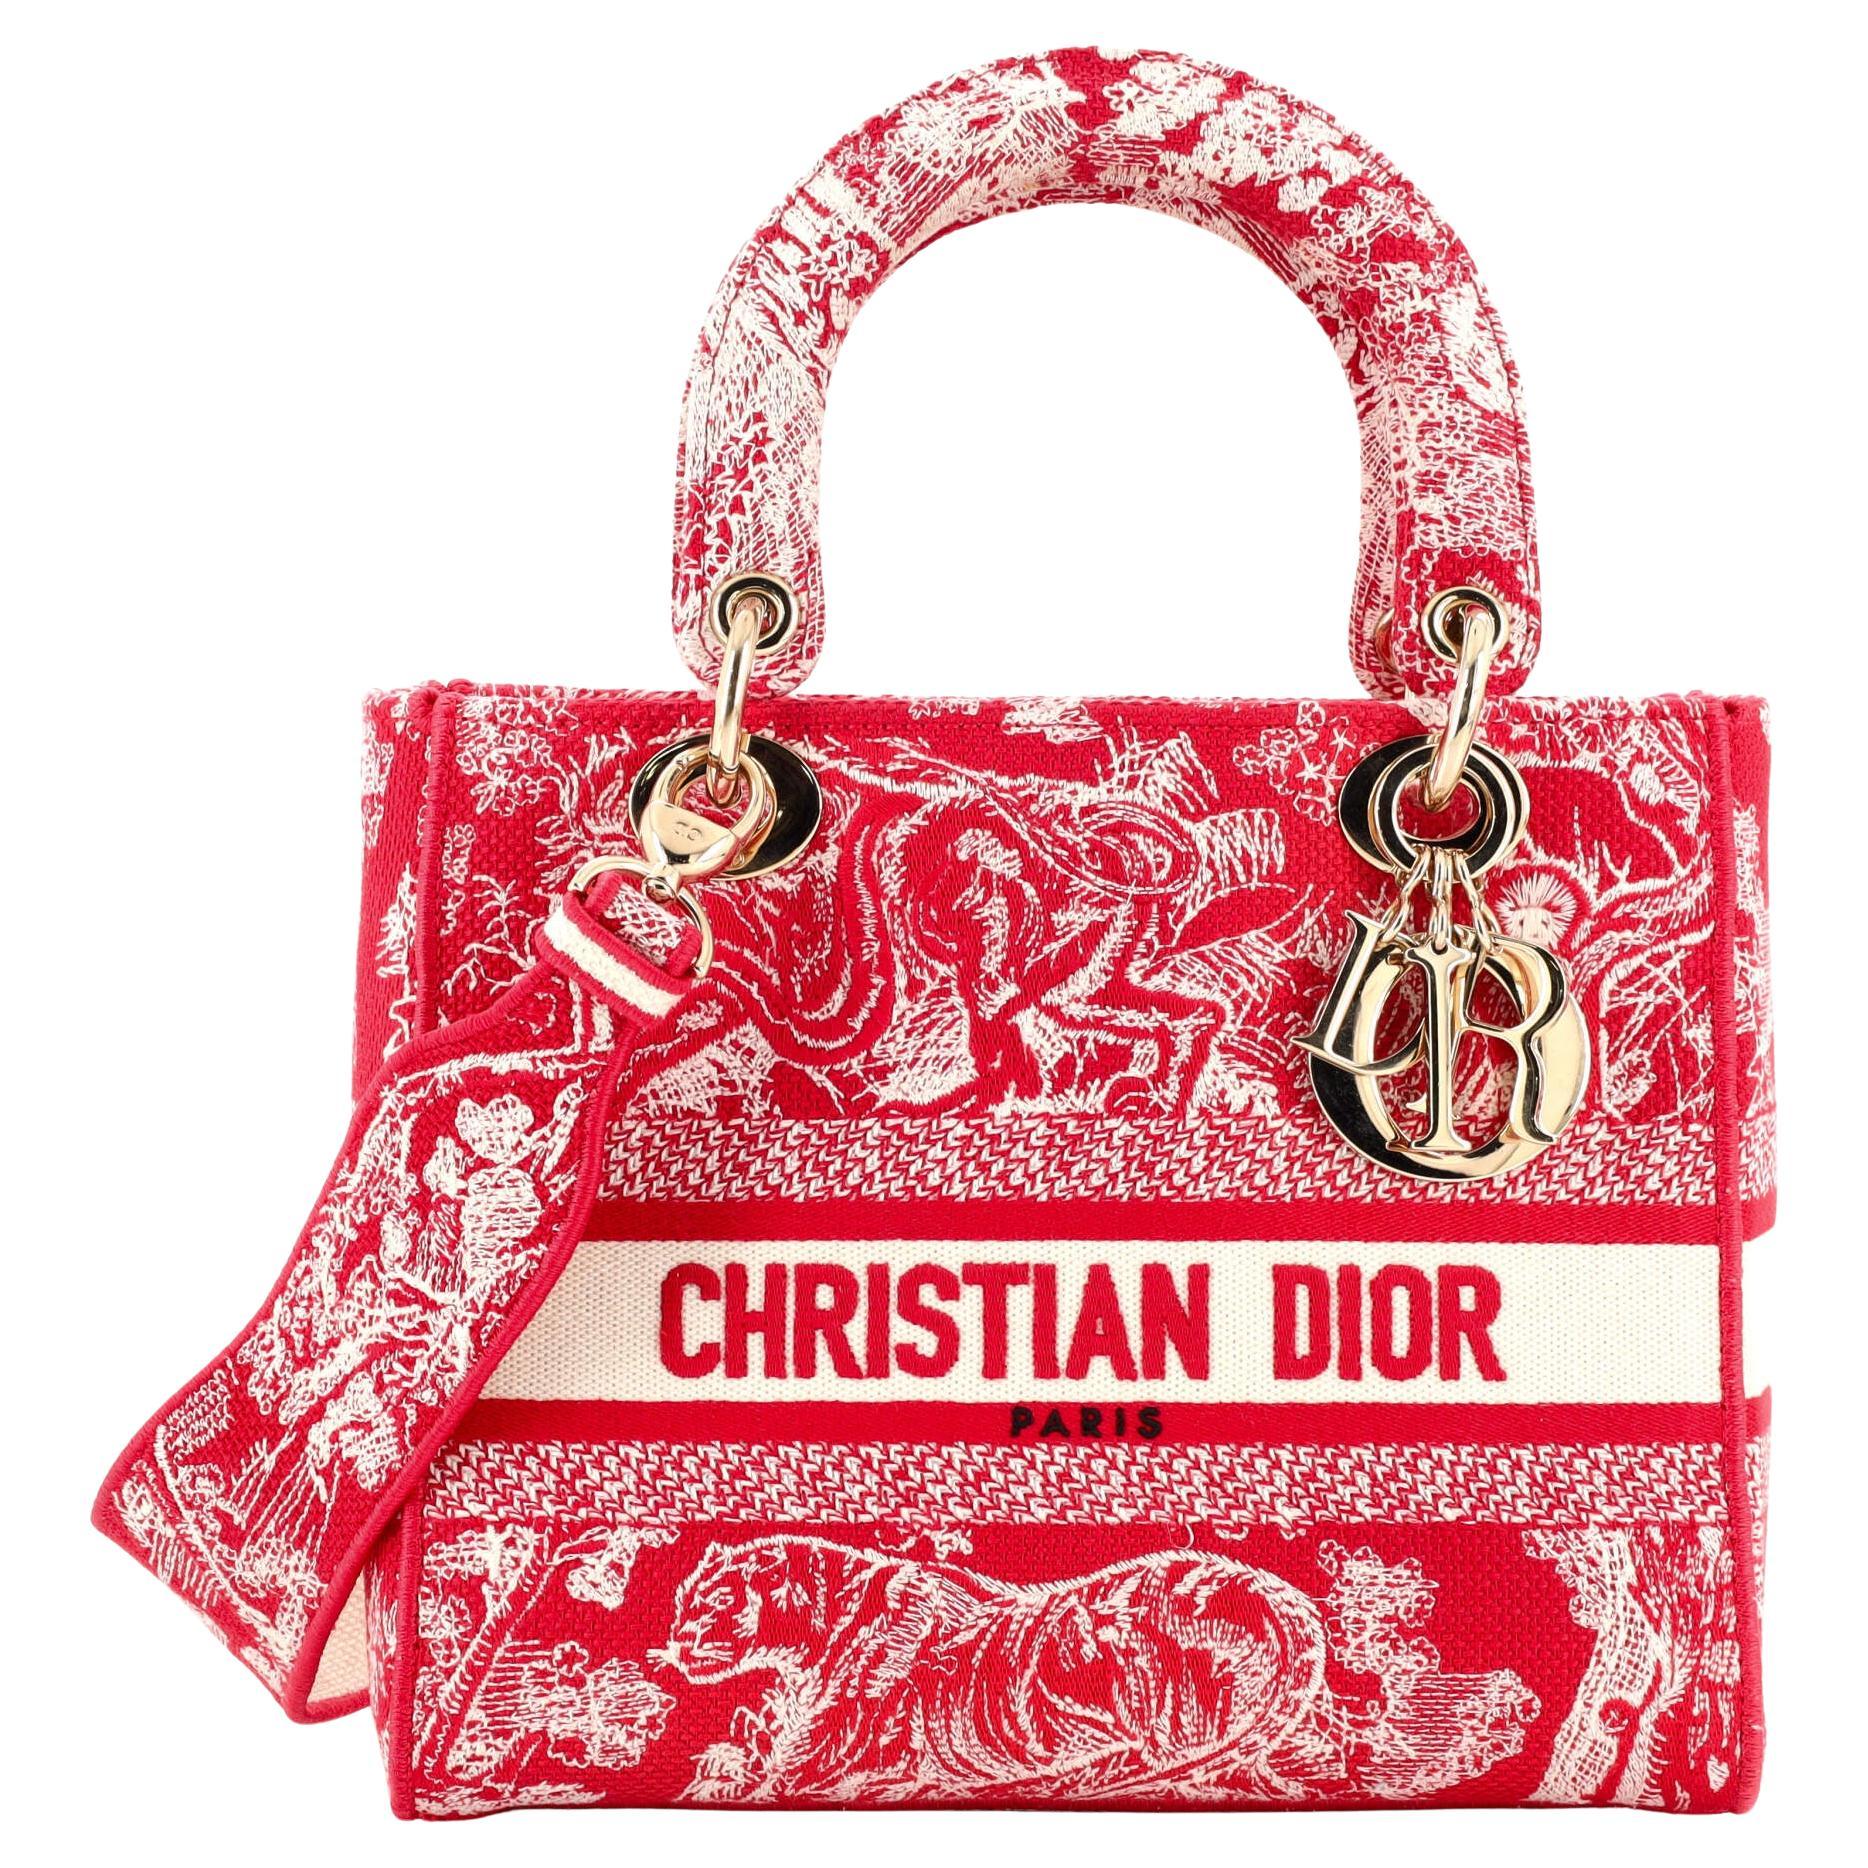 New Trendy Chain Belt Bag Fold Soft Cloud Bag Fashion Hobo Lady Shoulder Bag  - China Small Lady Bag and Crossbody Lizard Bags price